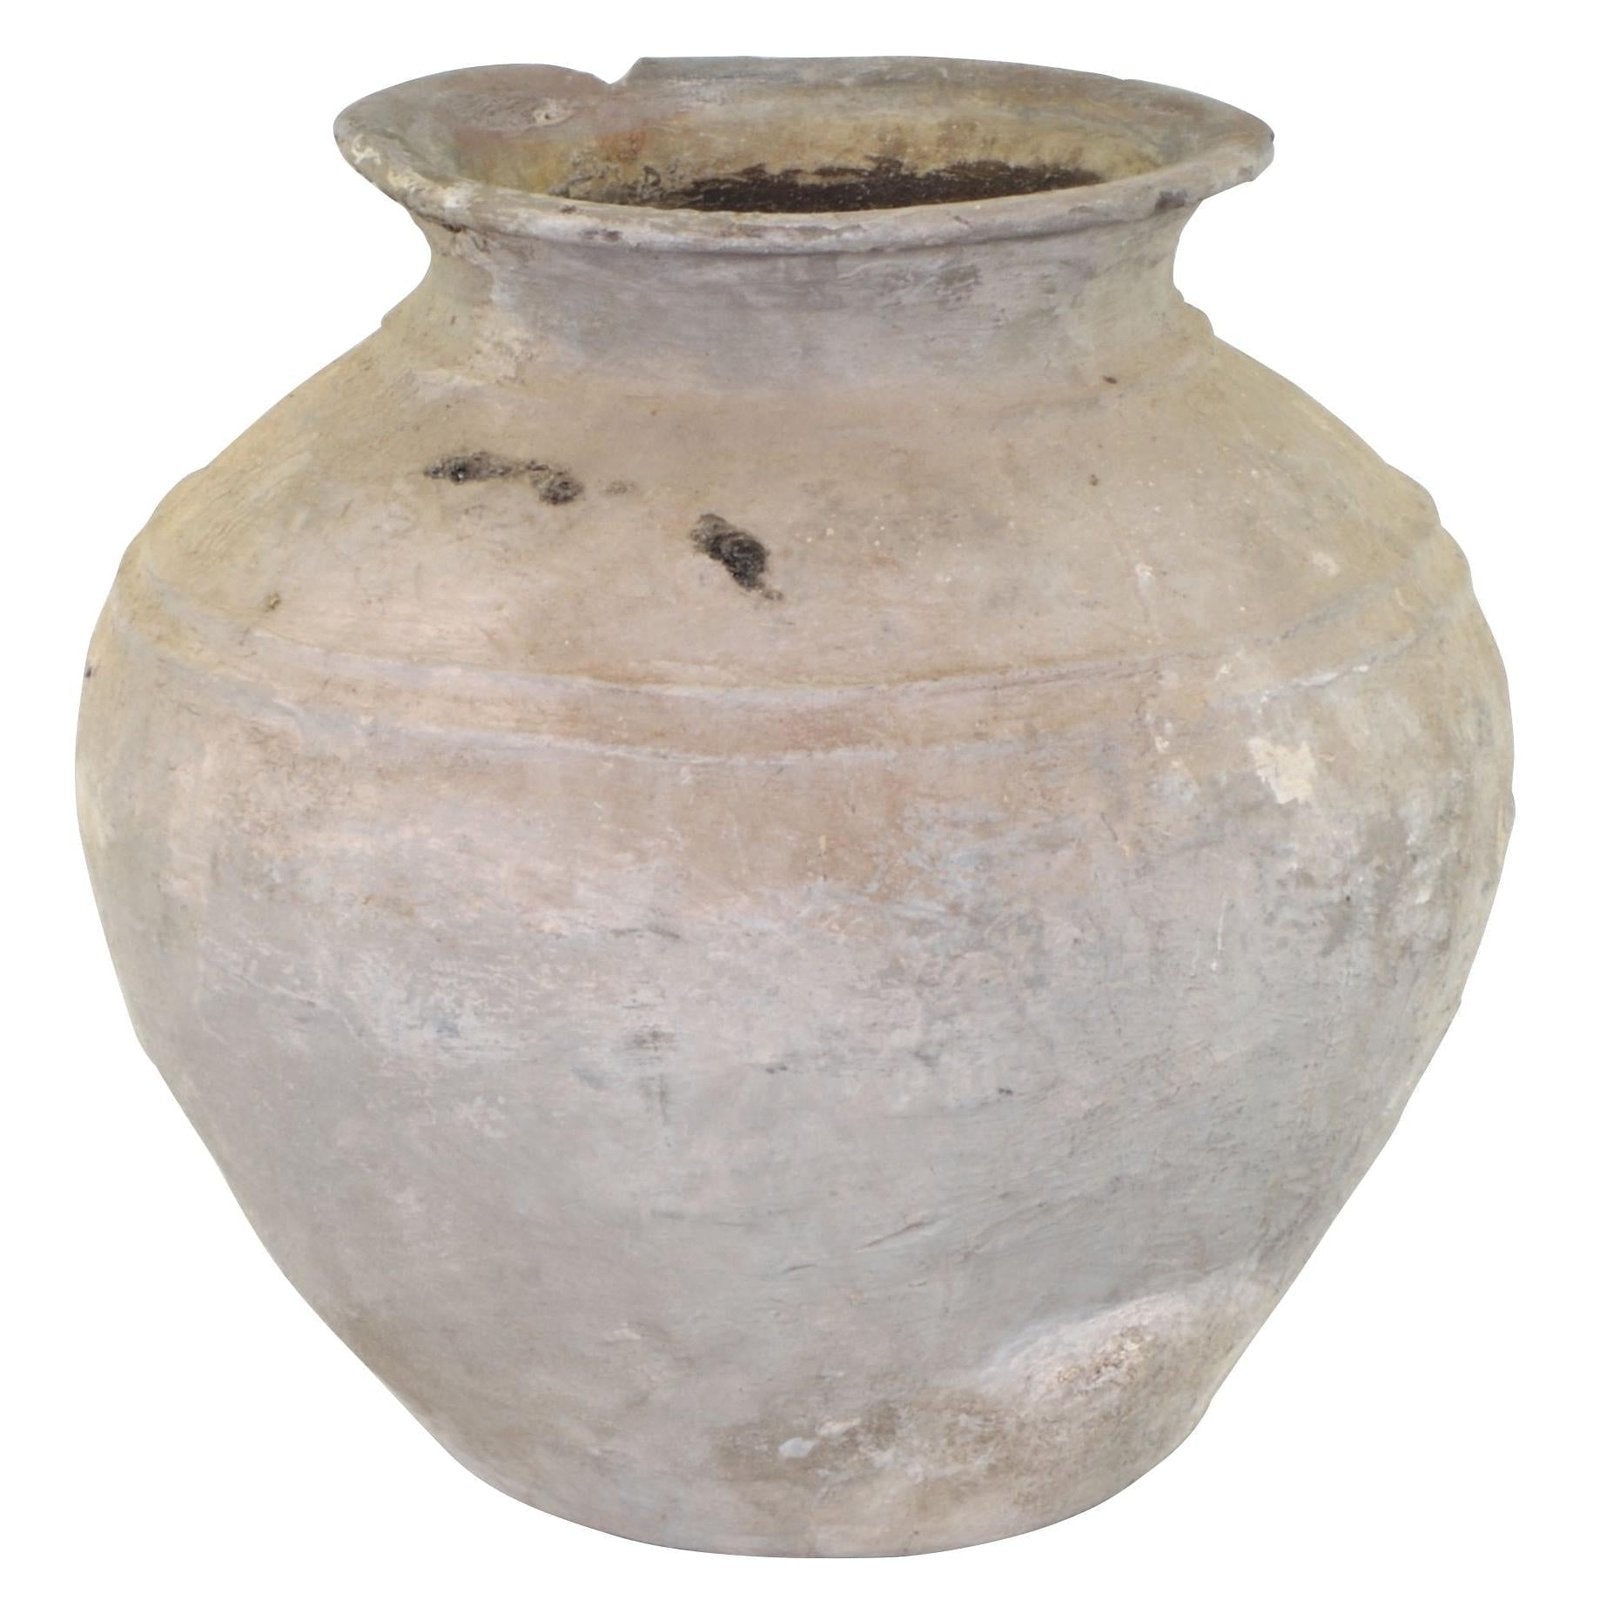 Restoration Water Pot